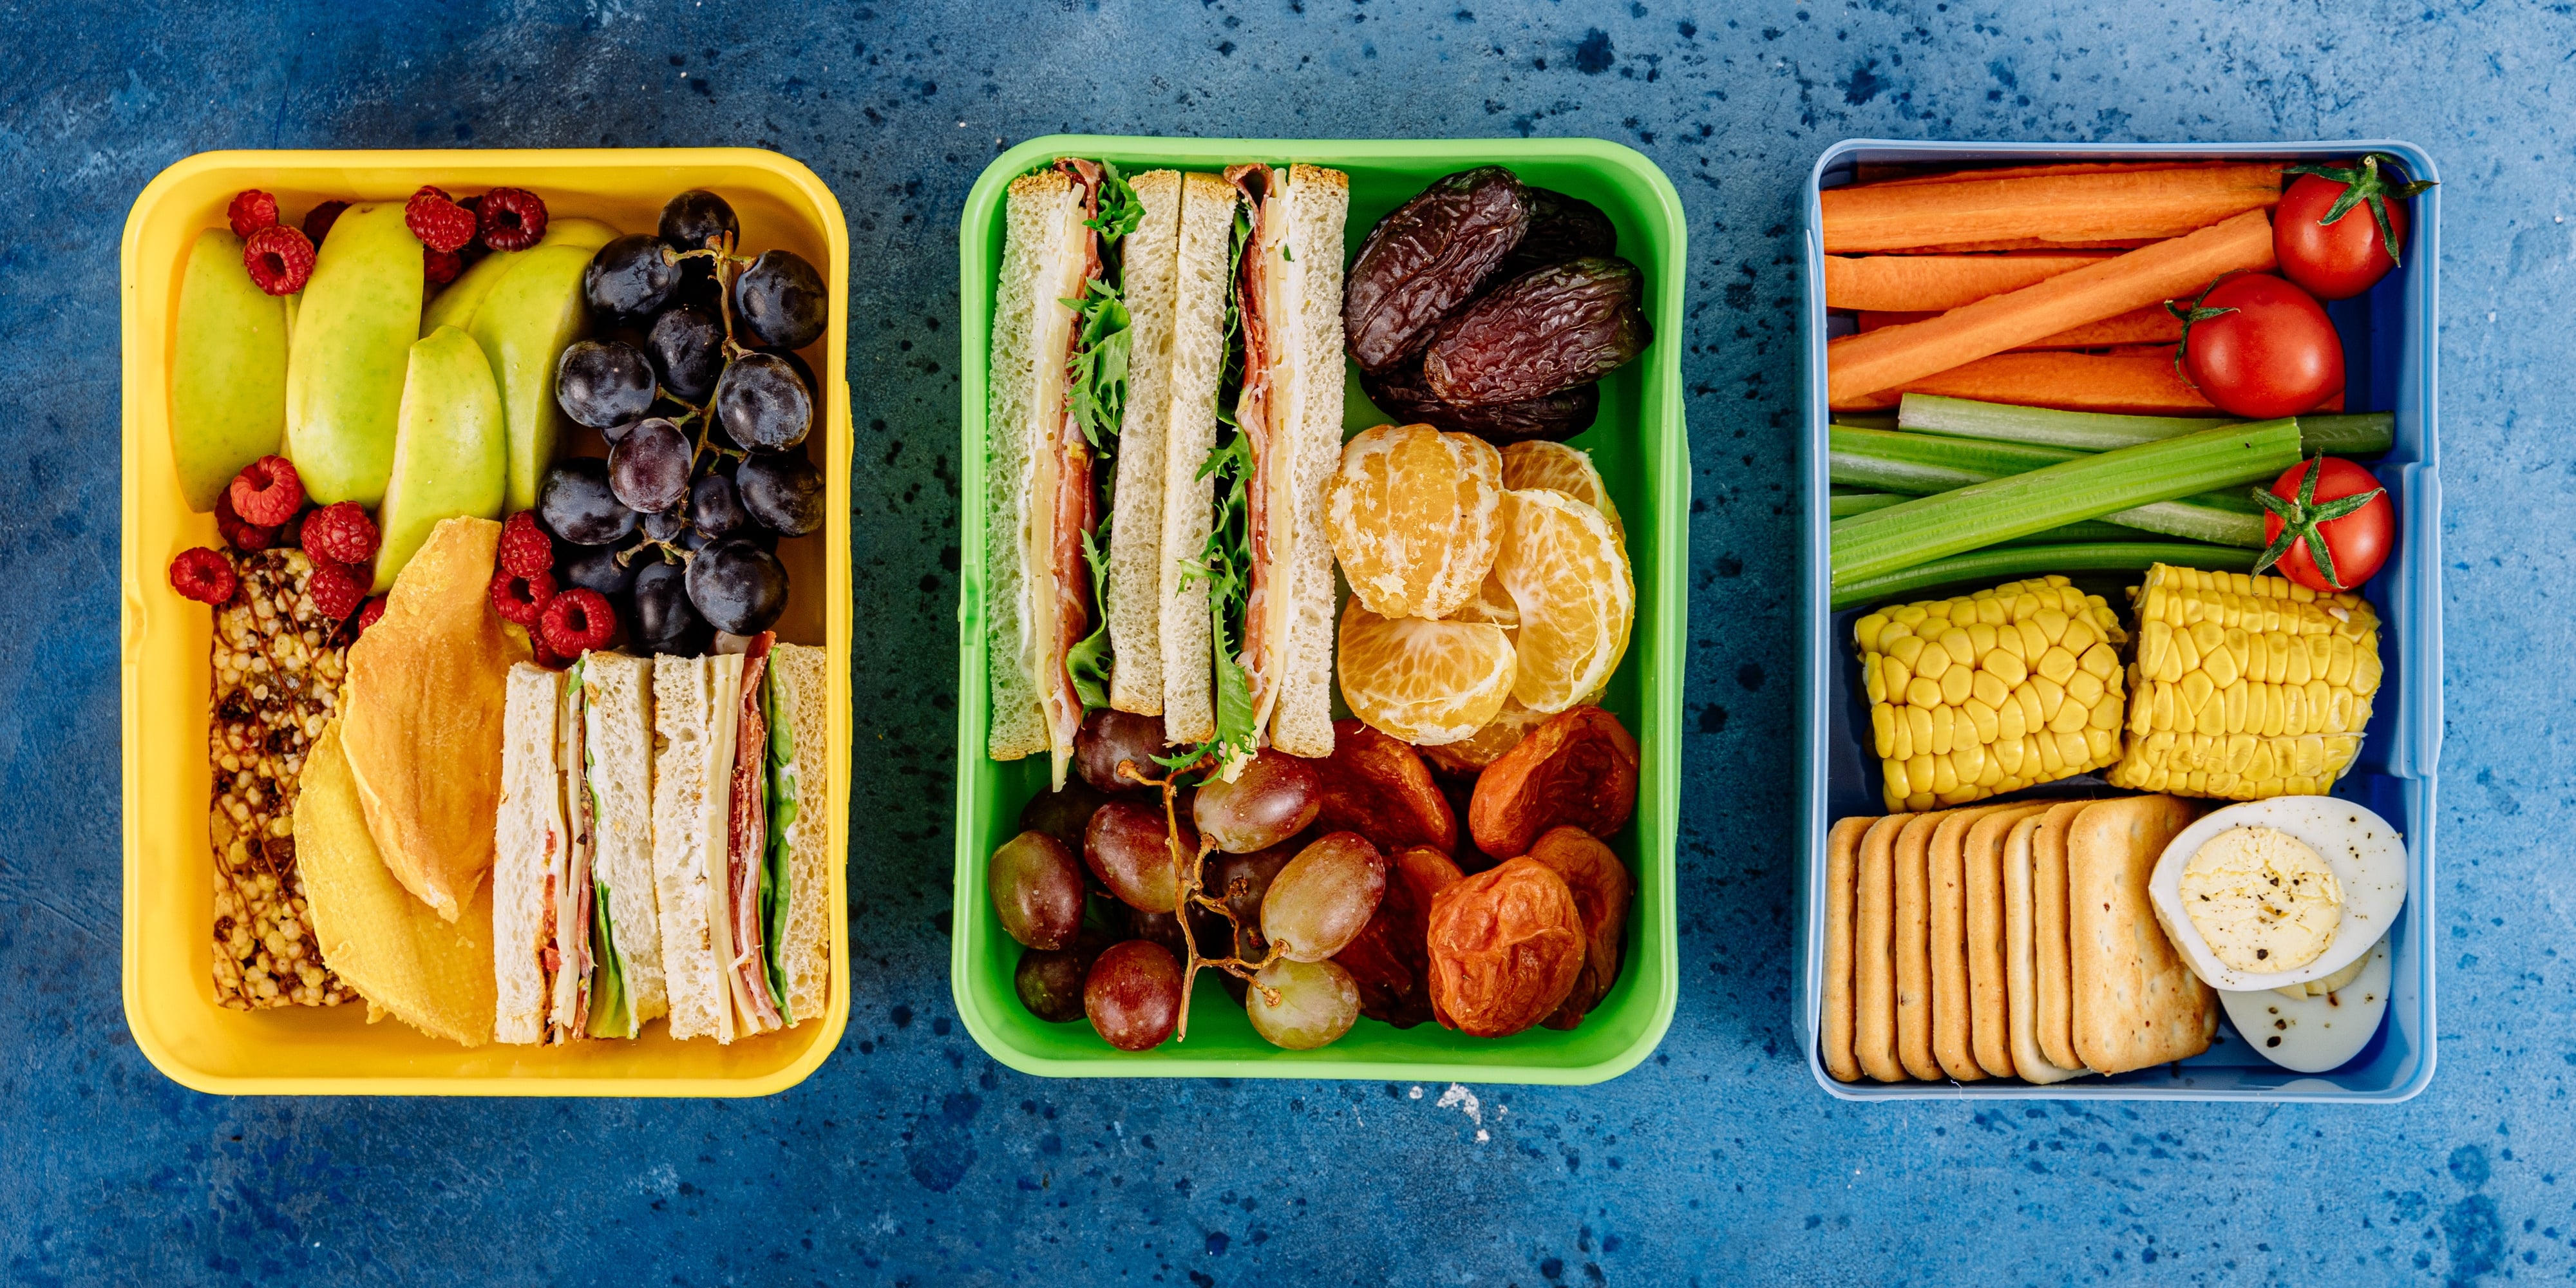 Healthy School Lunch Ideas - Cornerstone Family Healthcare